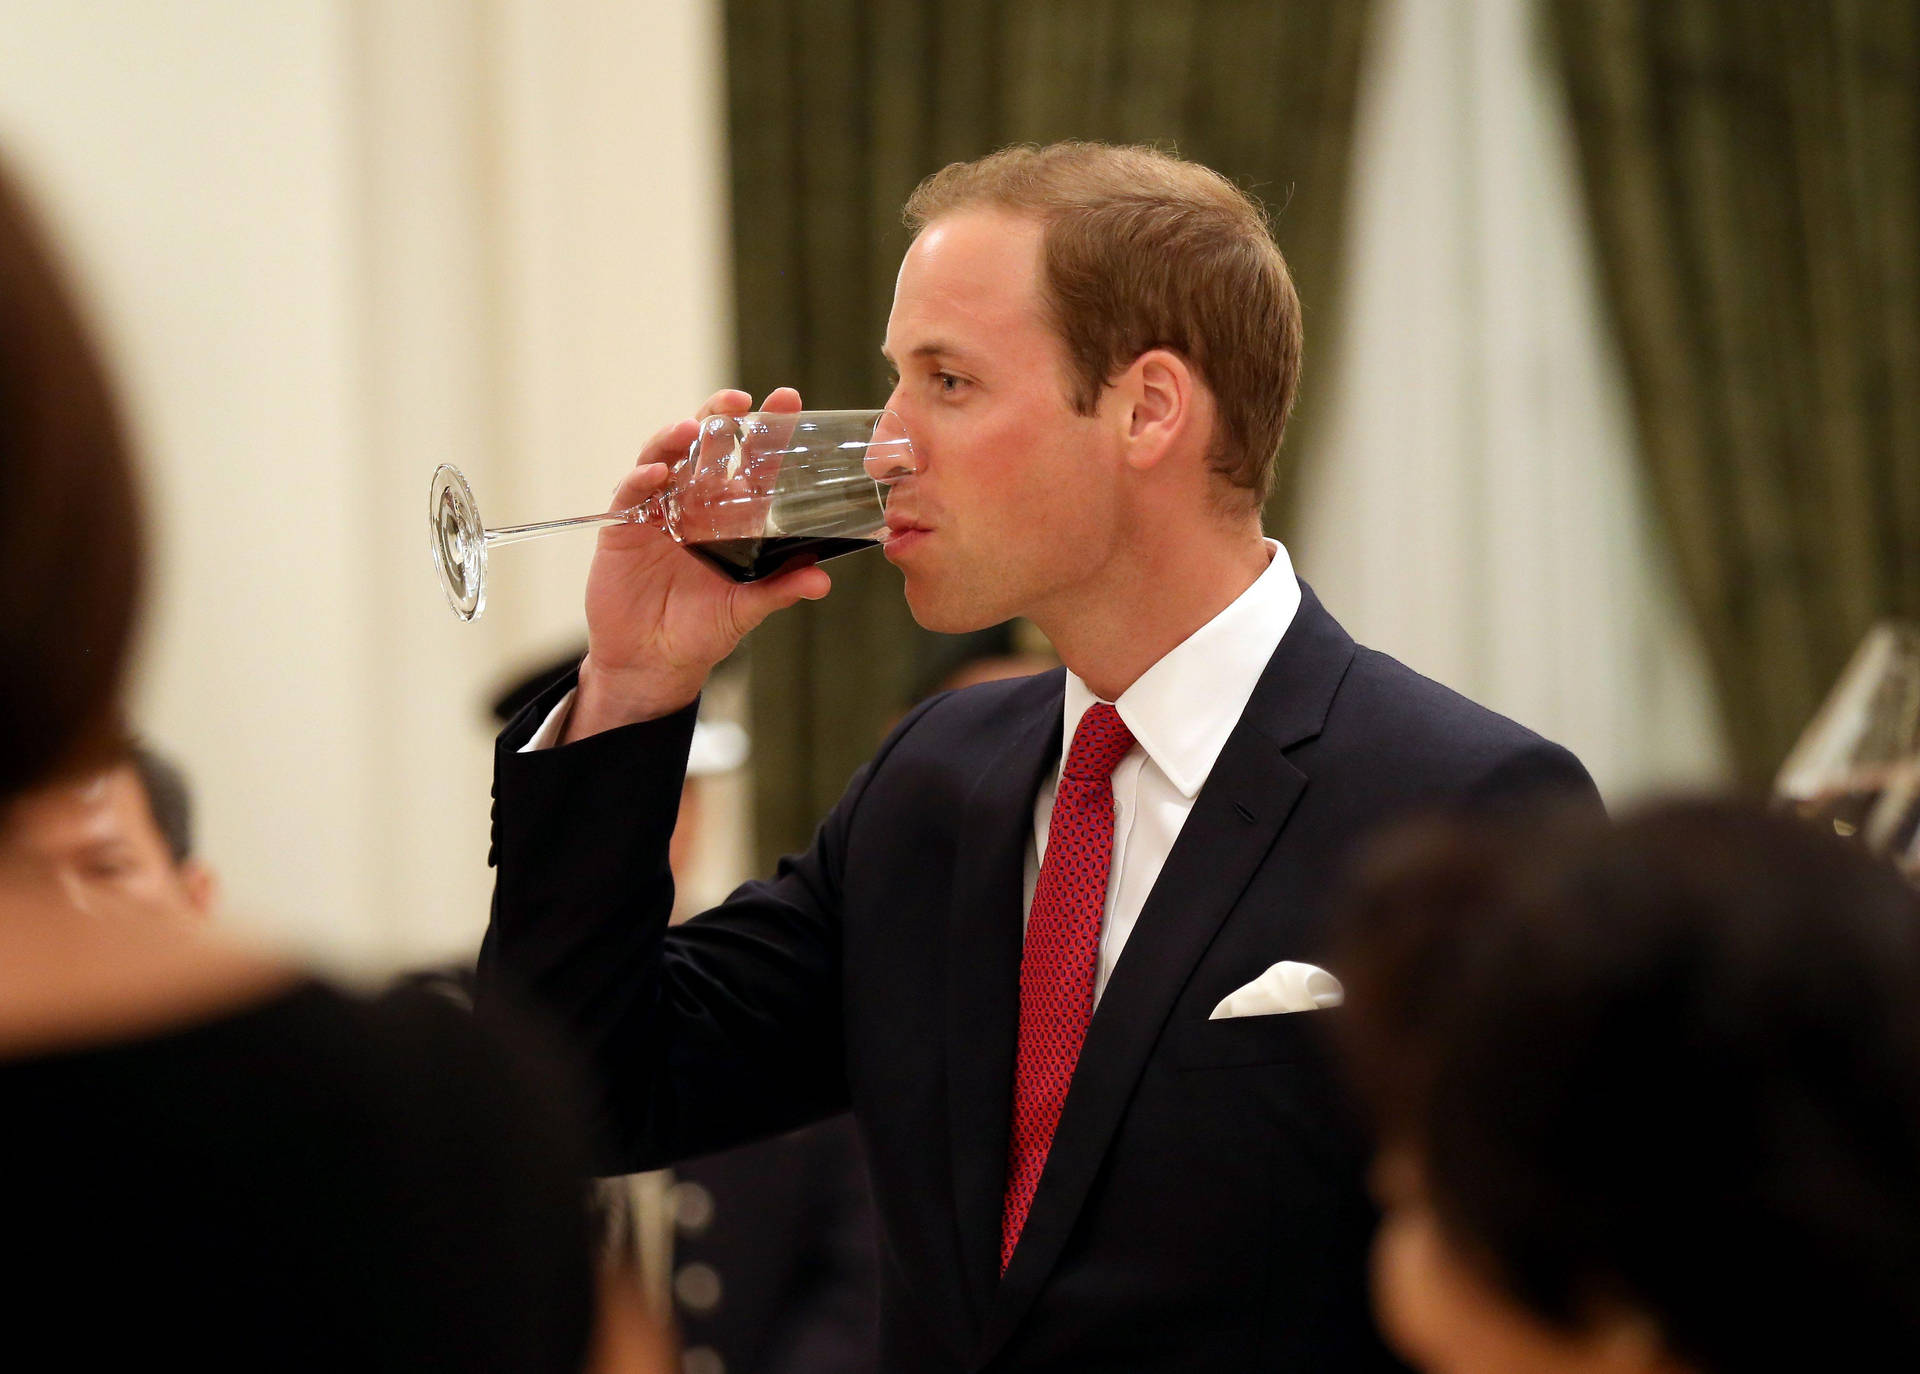 Prince William Drinking Wine